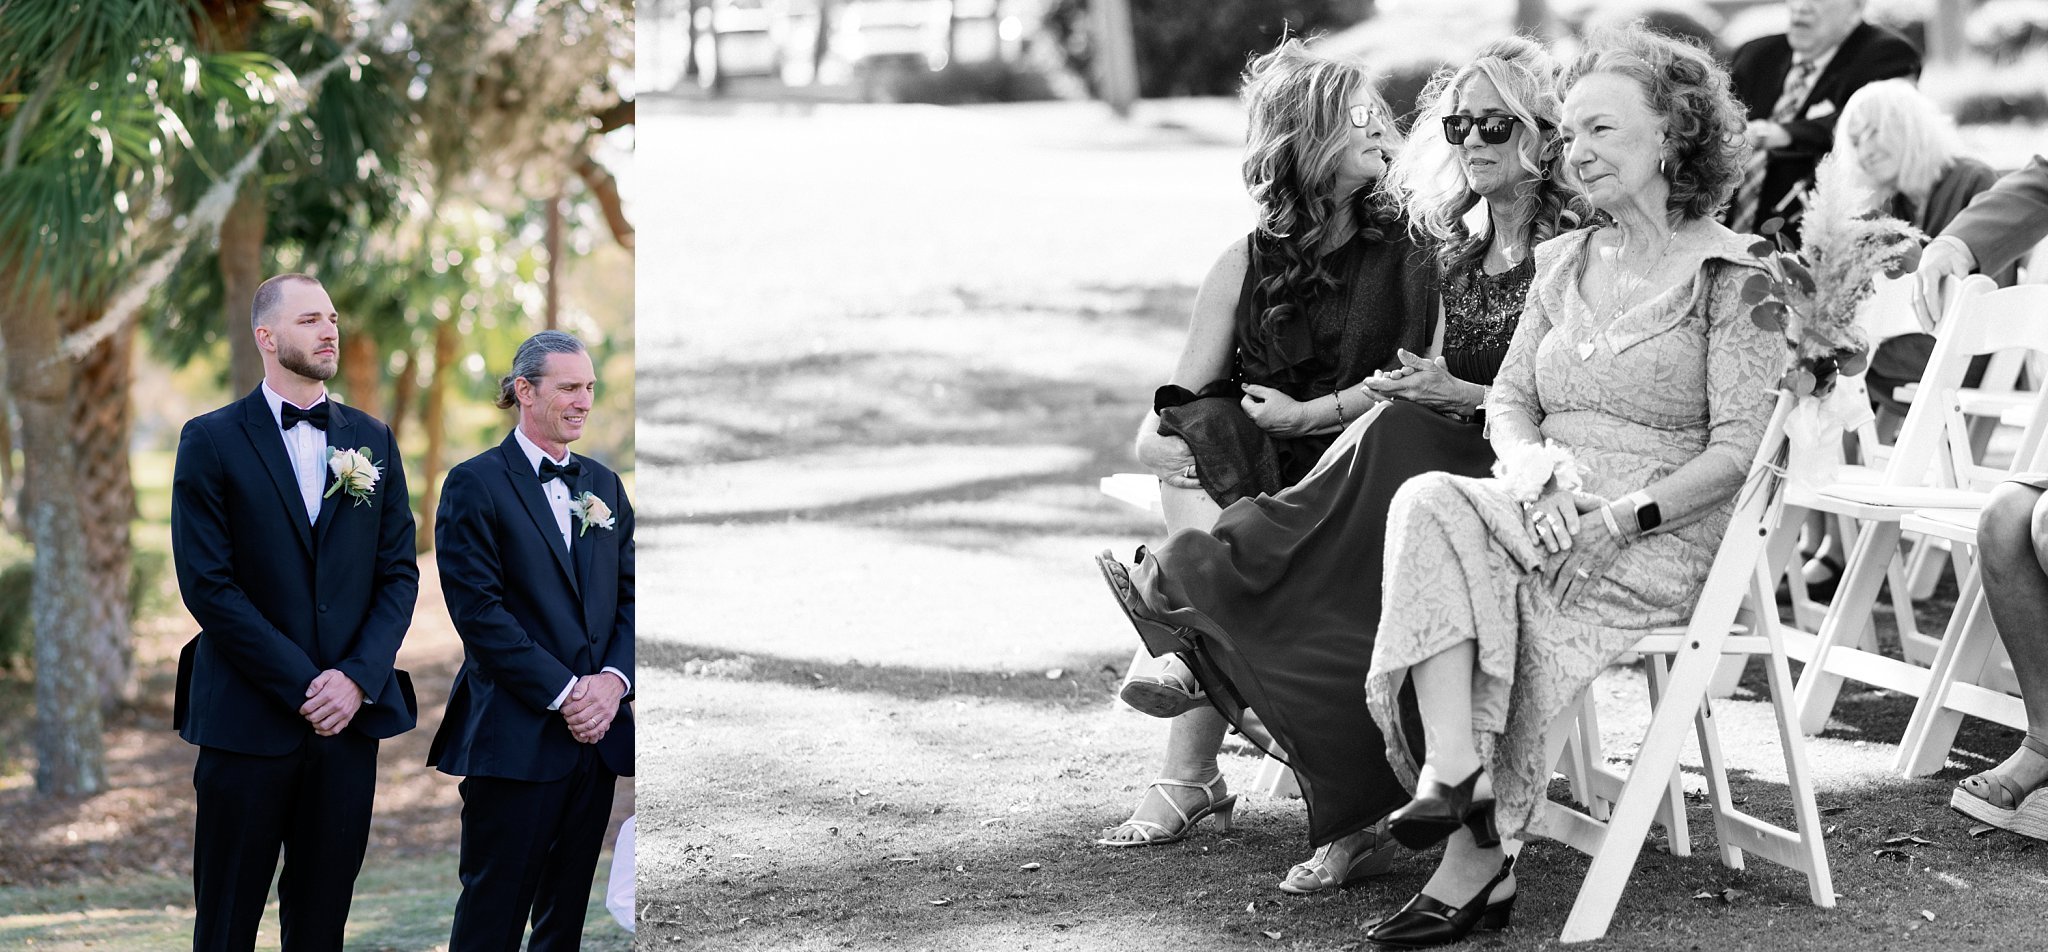 best wedding photographers in Beaufort South Carolina for black tie weddings